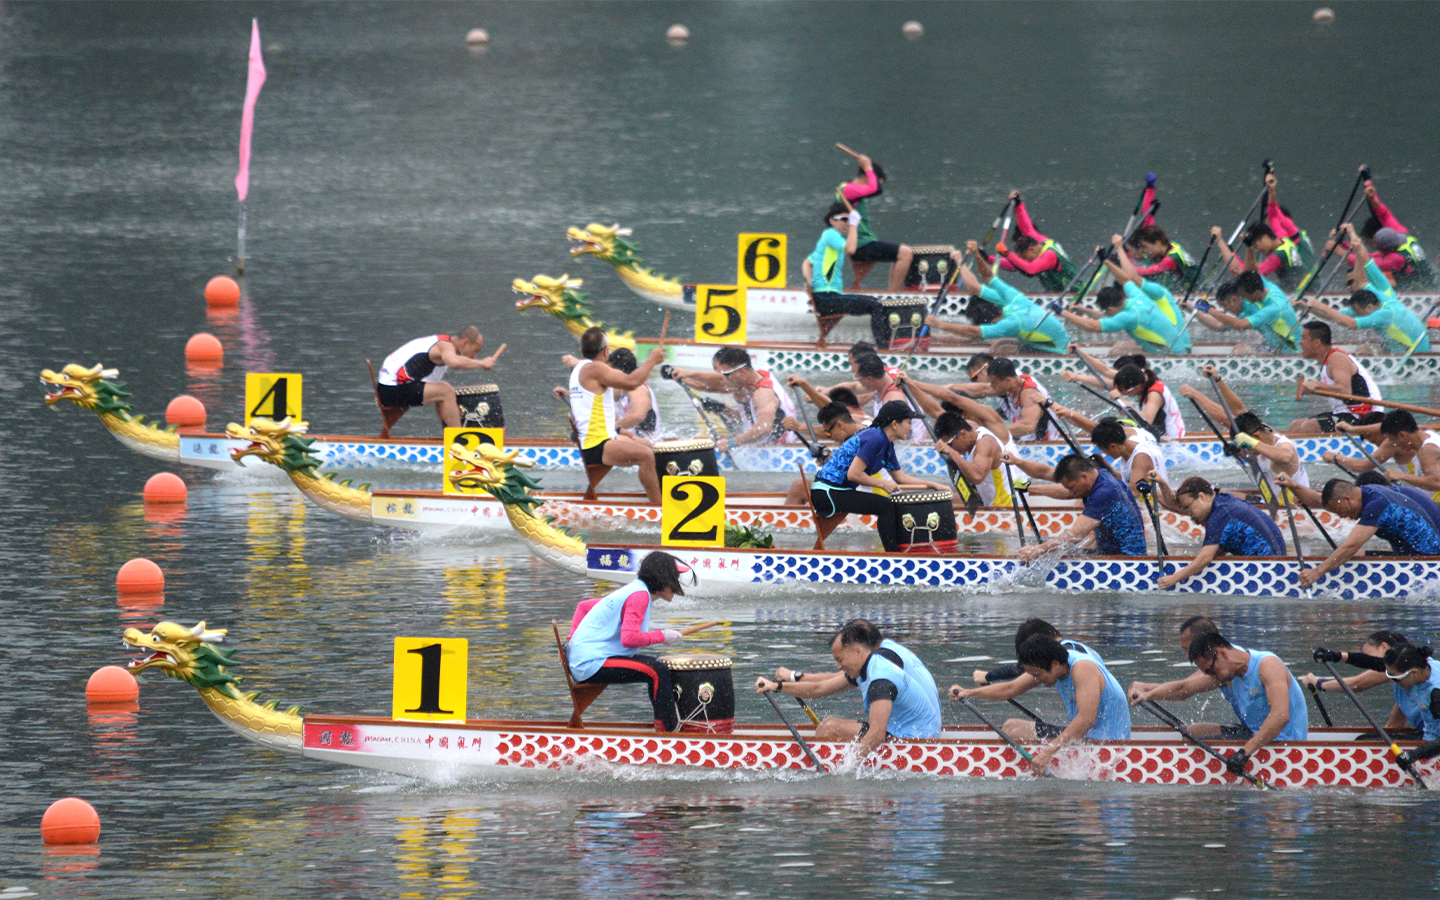 International teams return to the Dragon Boat Races